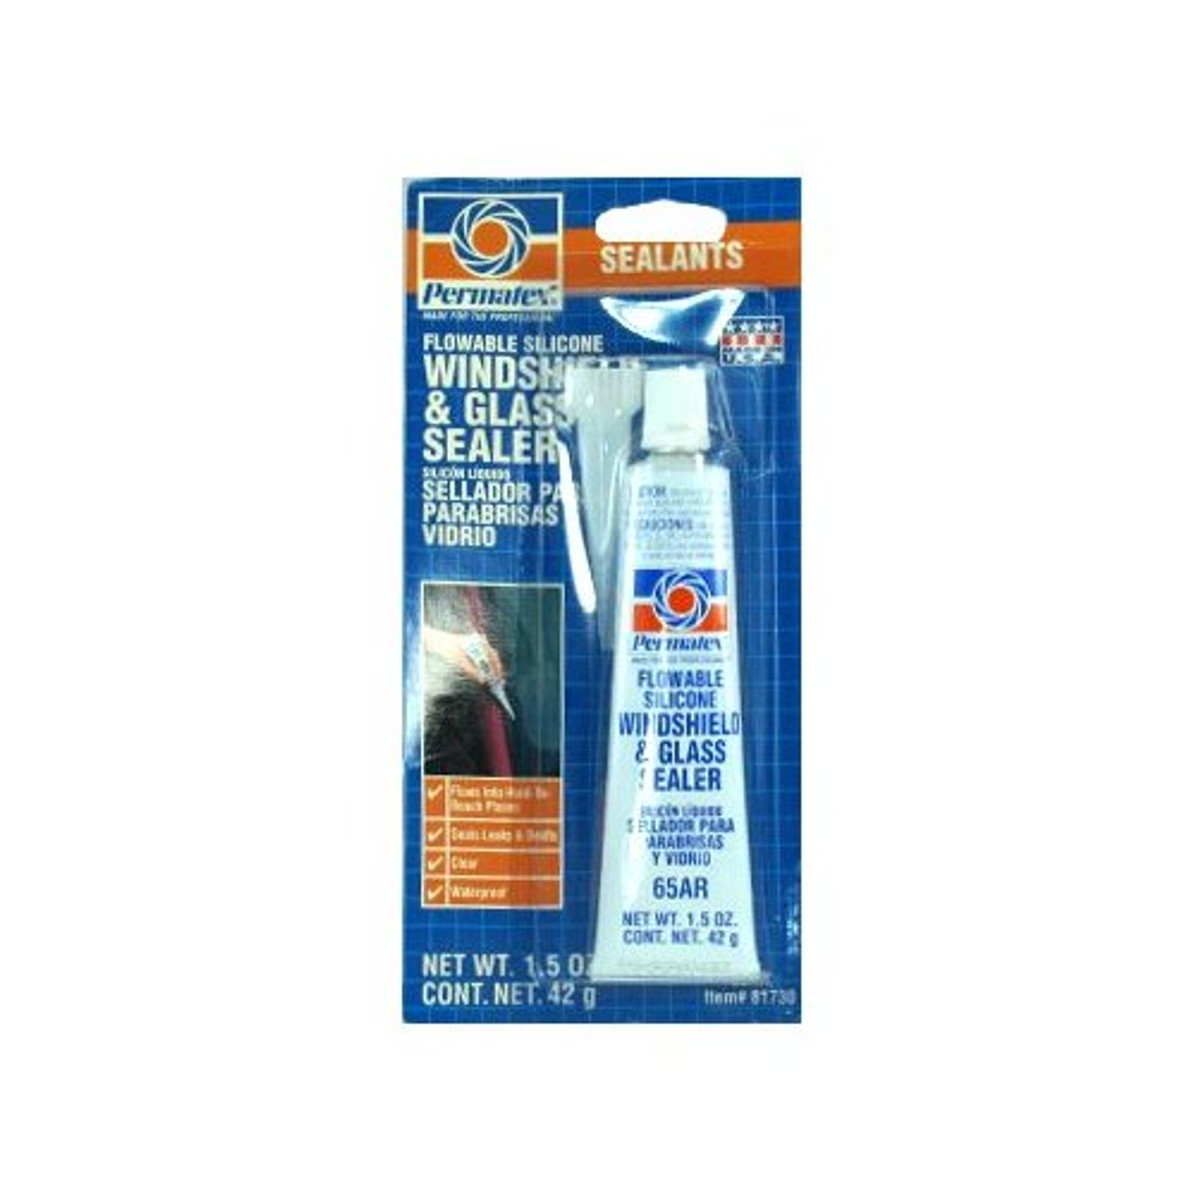 Rust-Oleum 11 oz. Clear Flexible Rubberized Coating Leak Sealer Spray -  Greschlers Hardware